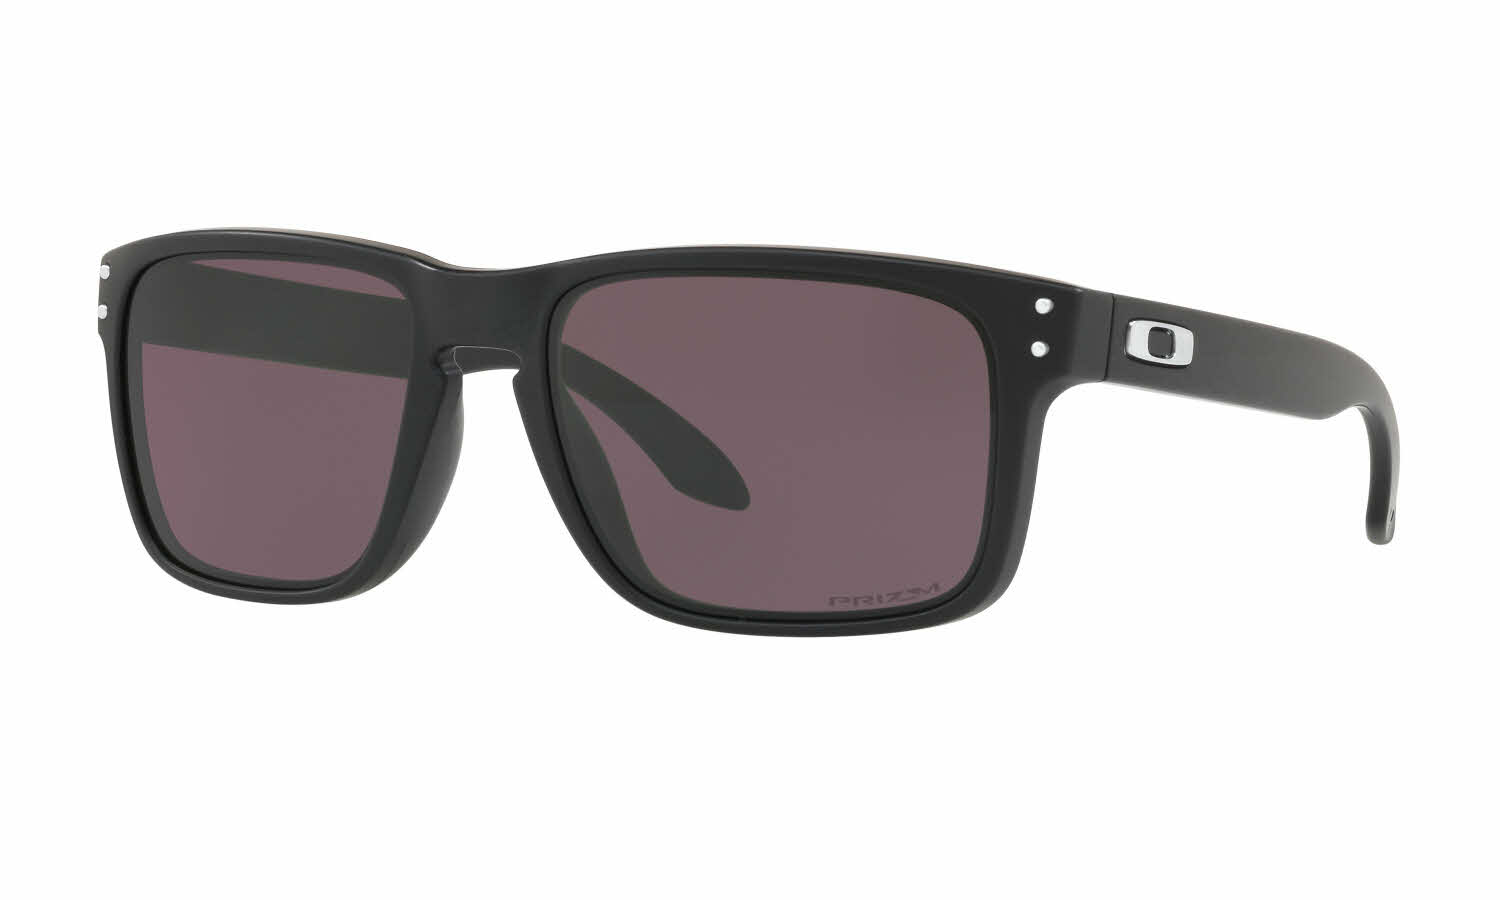 oakley holbrook style sunglasses